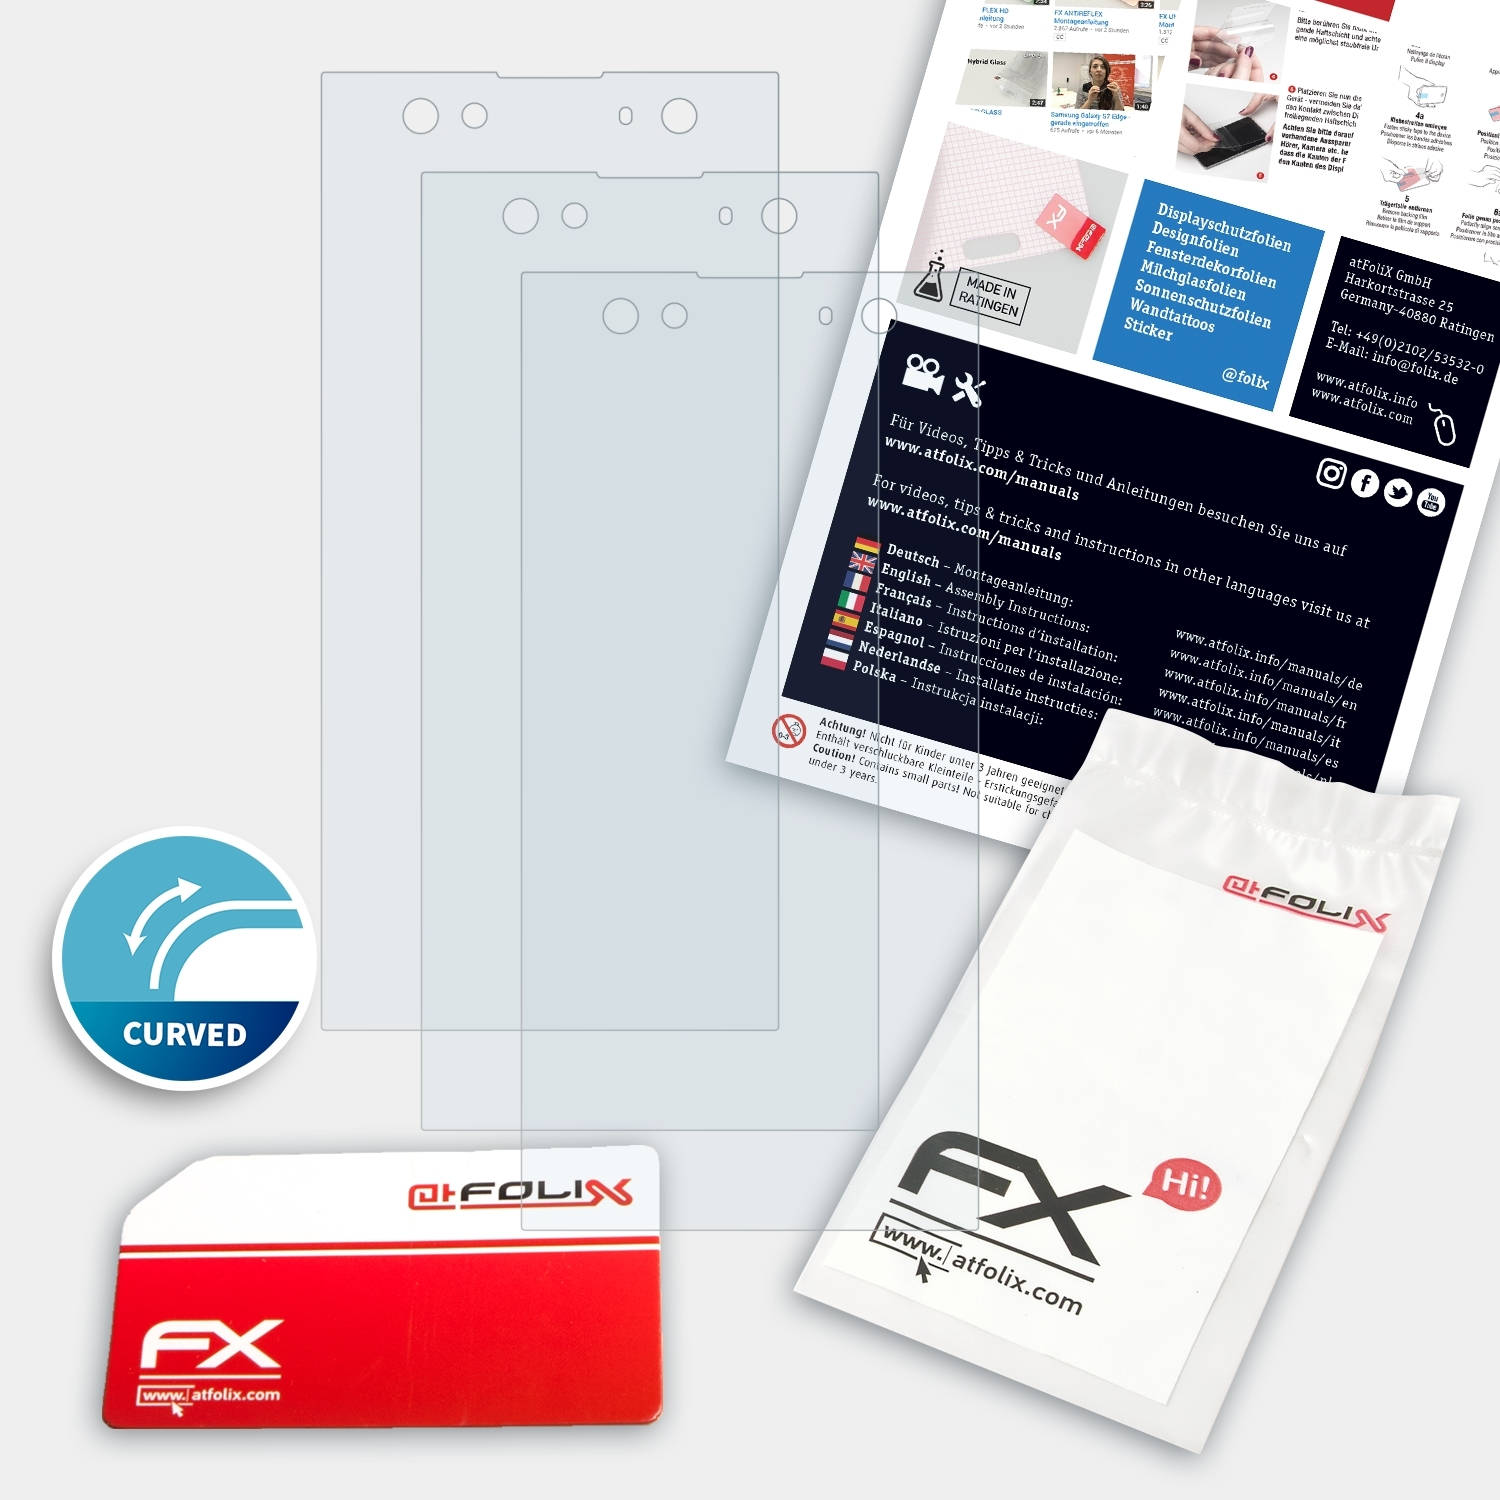 ATFOLIX 3x Sony FX-ActiFleX Ultra) Xperia XA2 Displayschutz(für